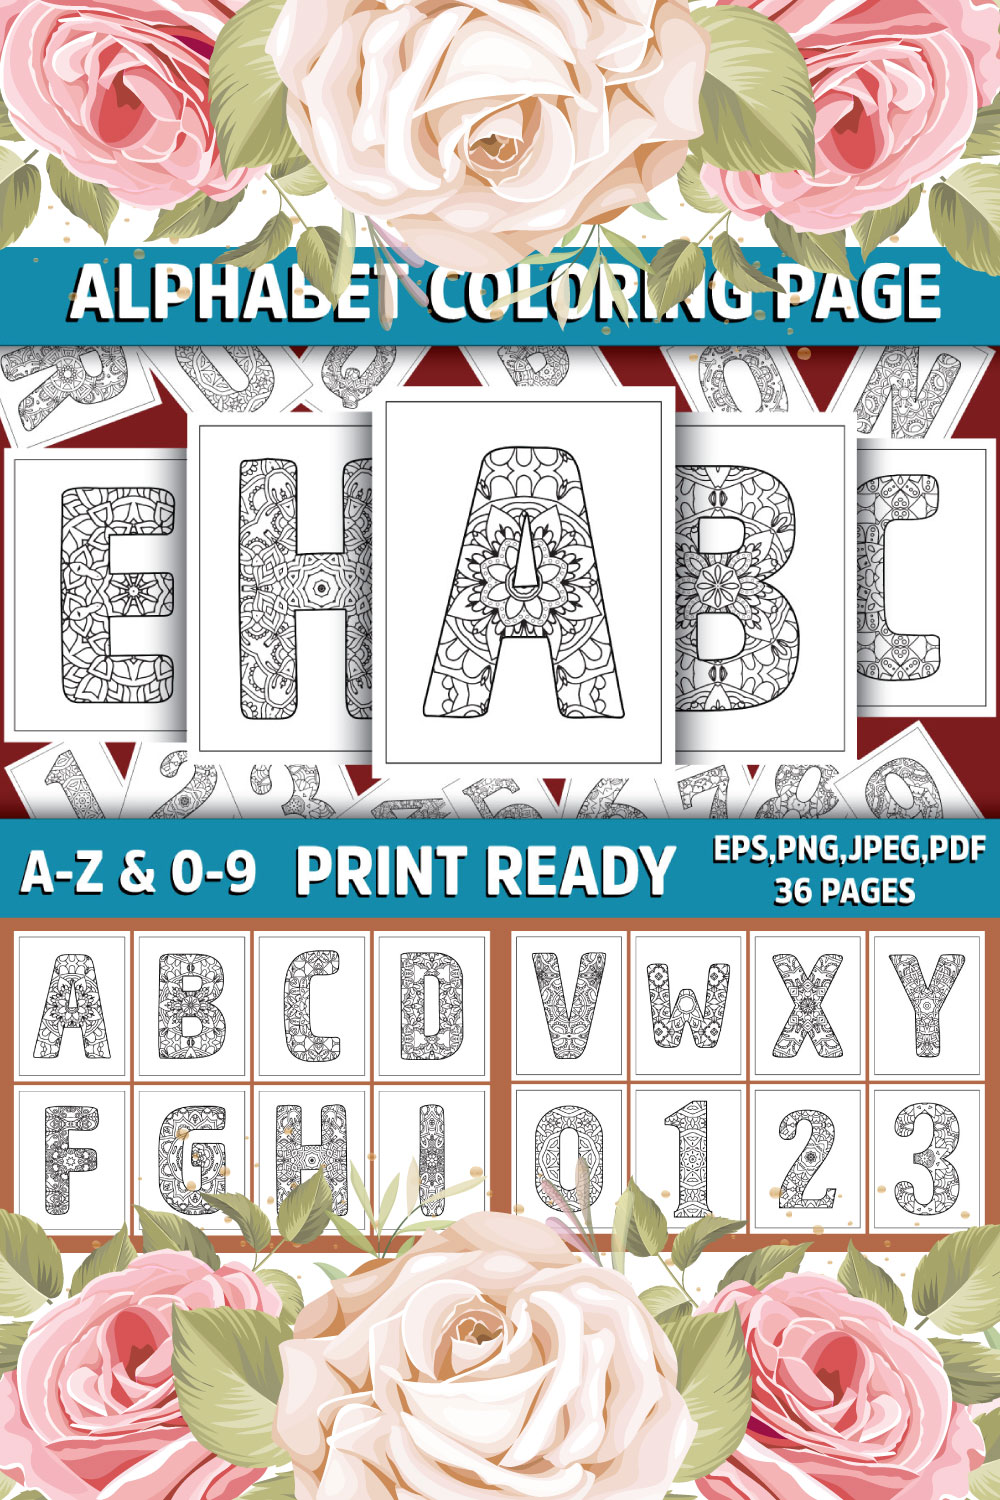 Alphabet Letter & Number Coloring Pages Bundle pinterest preview image.